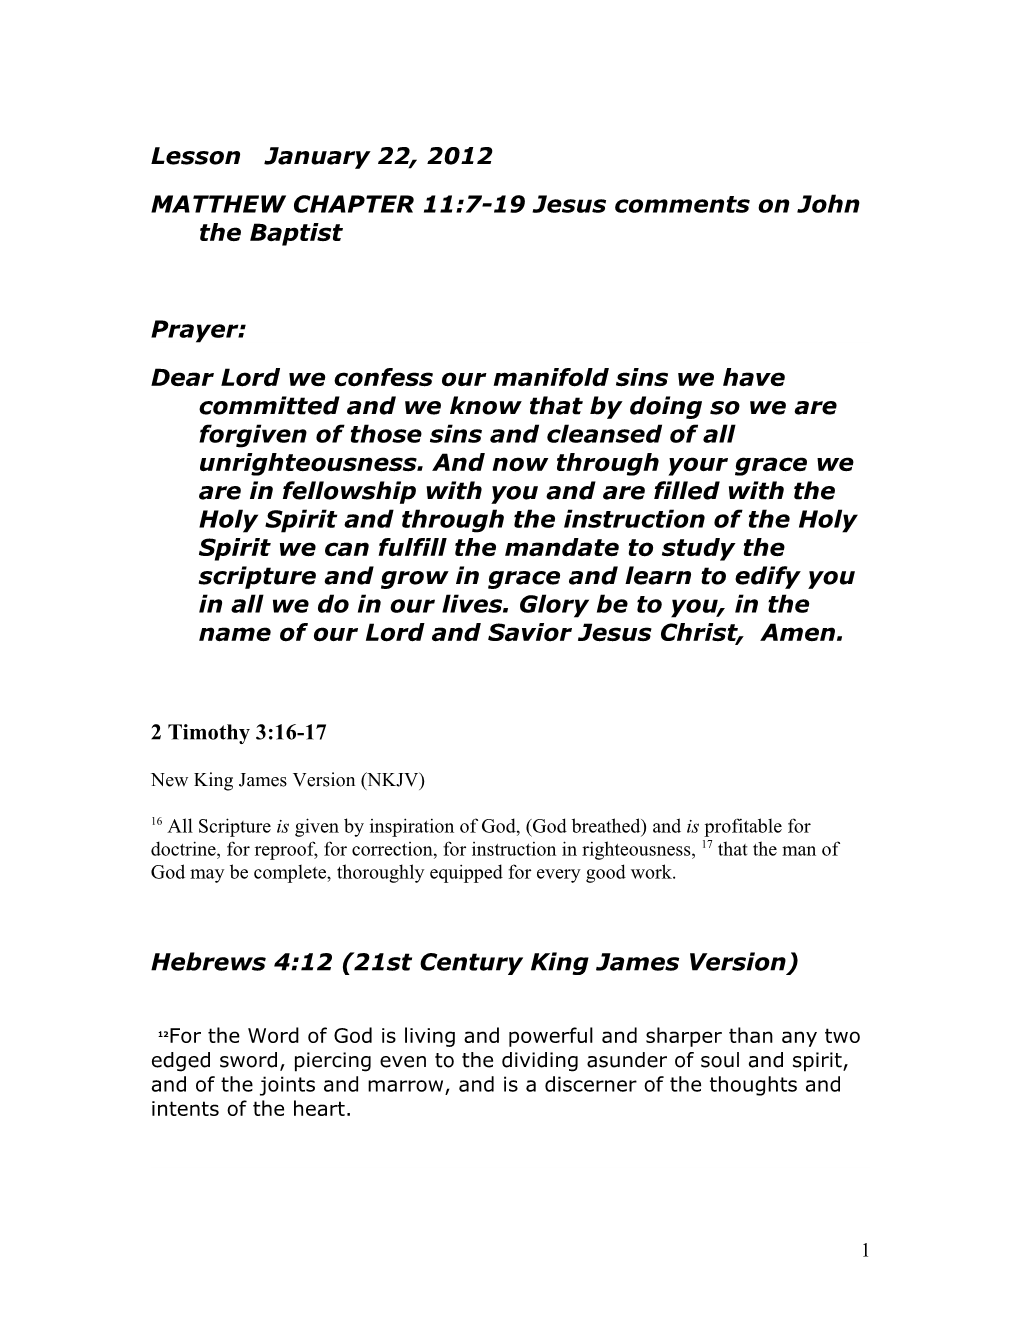 MATTHEW CHAPTER 11:7-19 Jesus Comments on John the Baptist